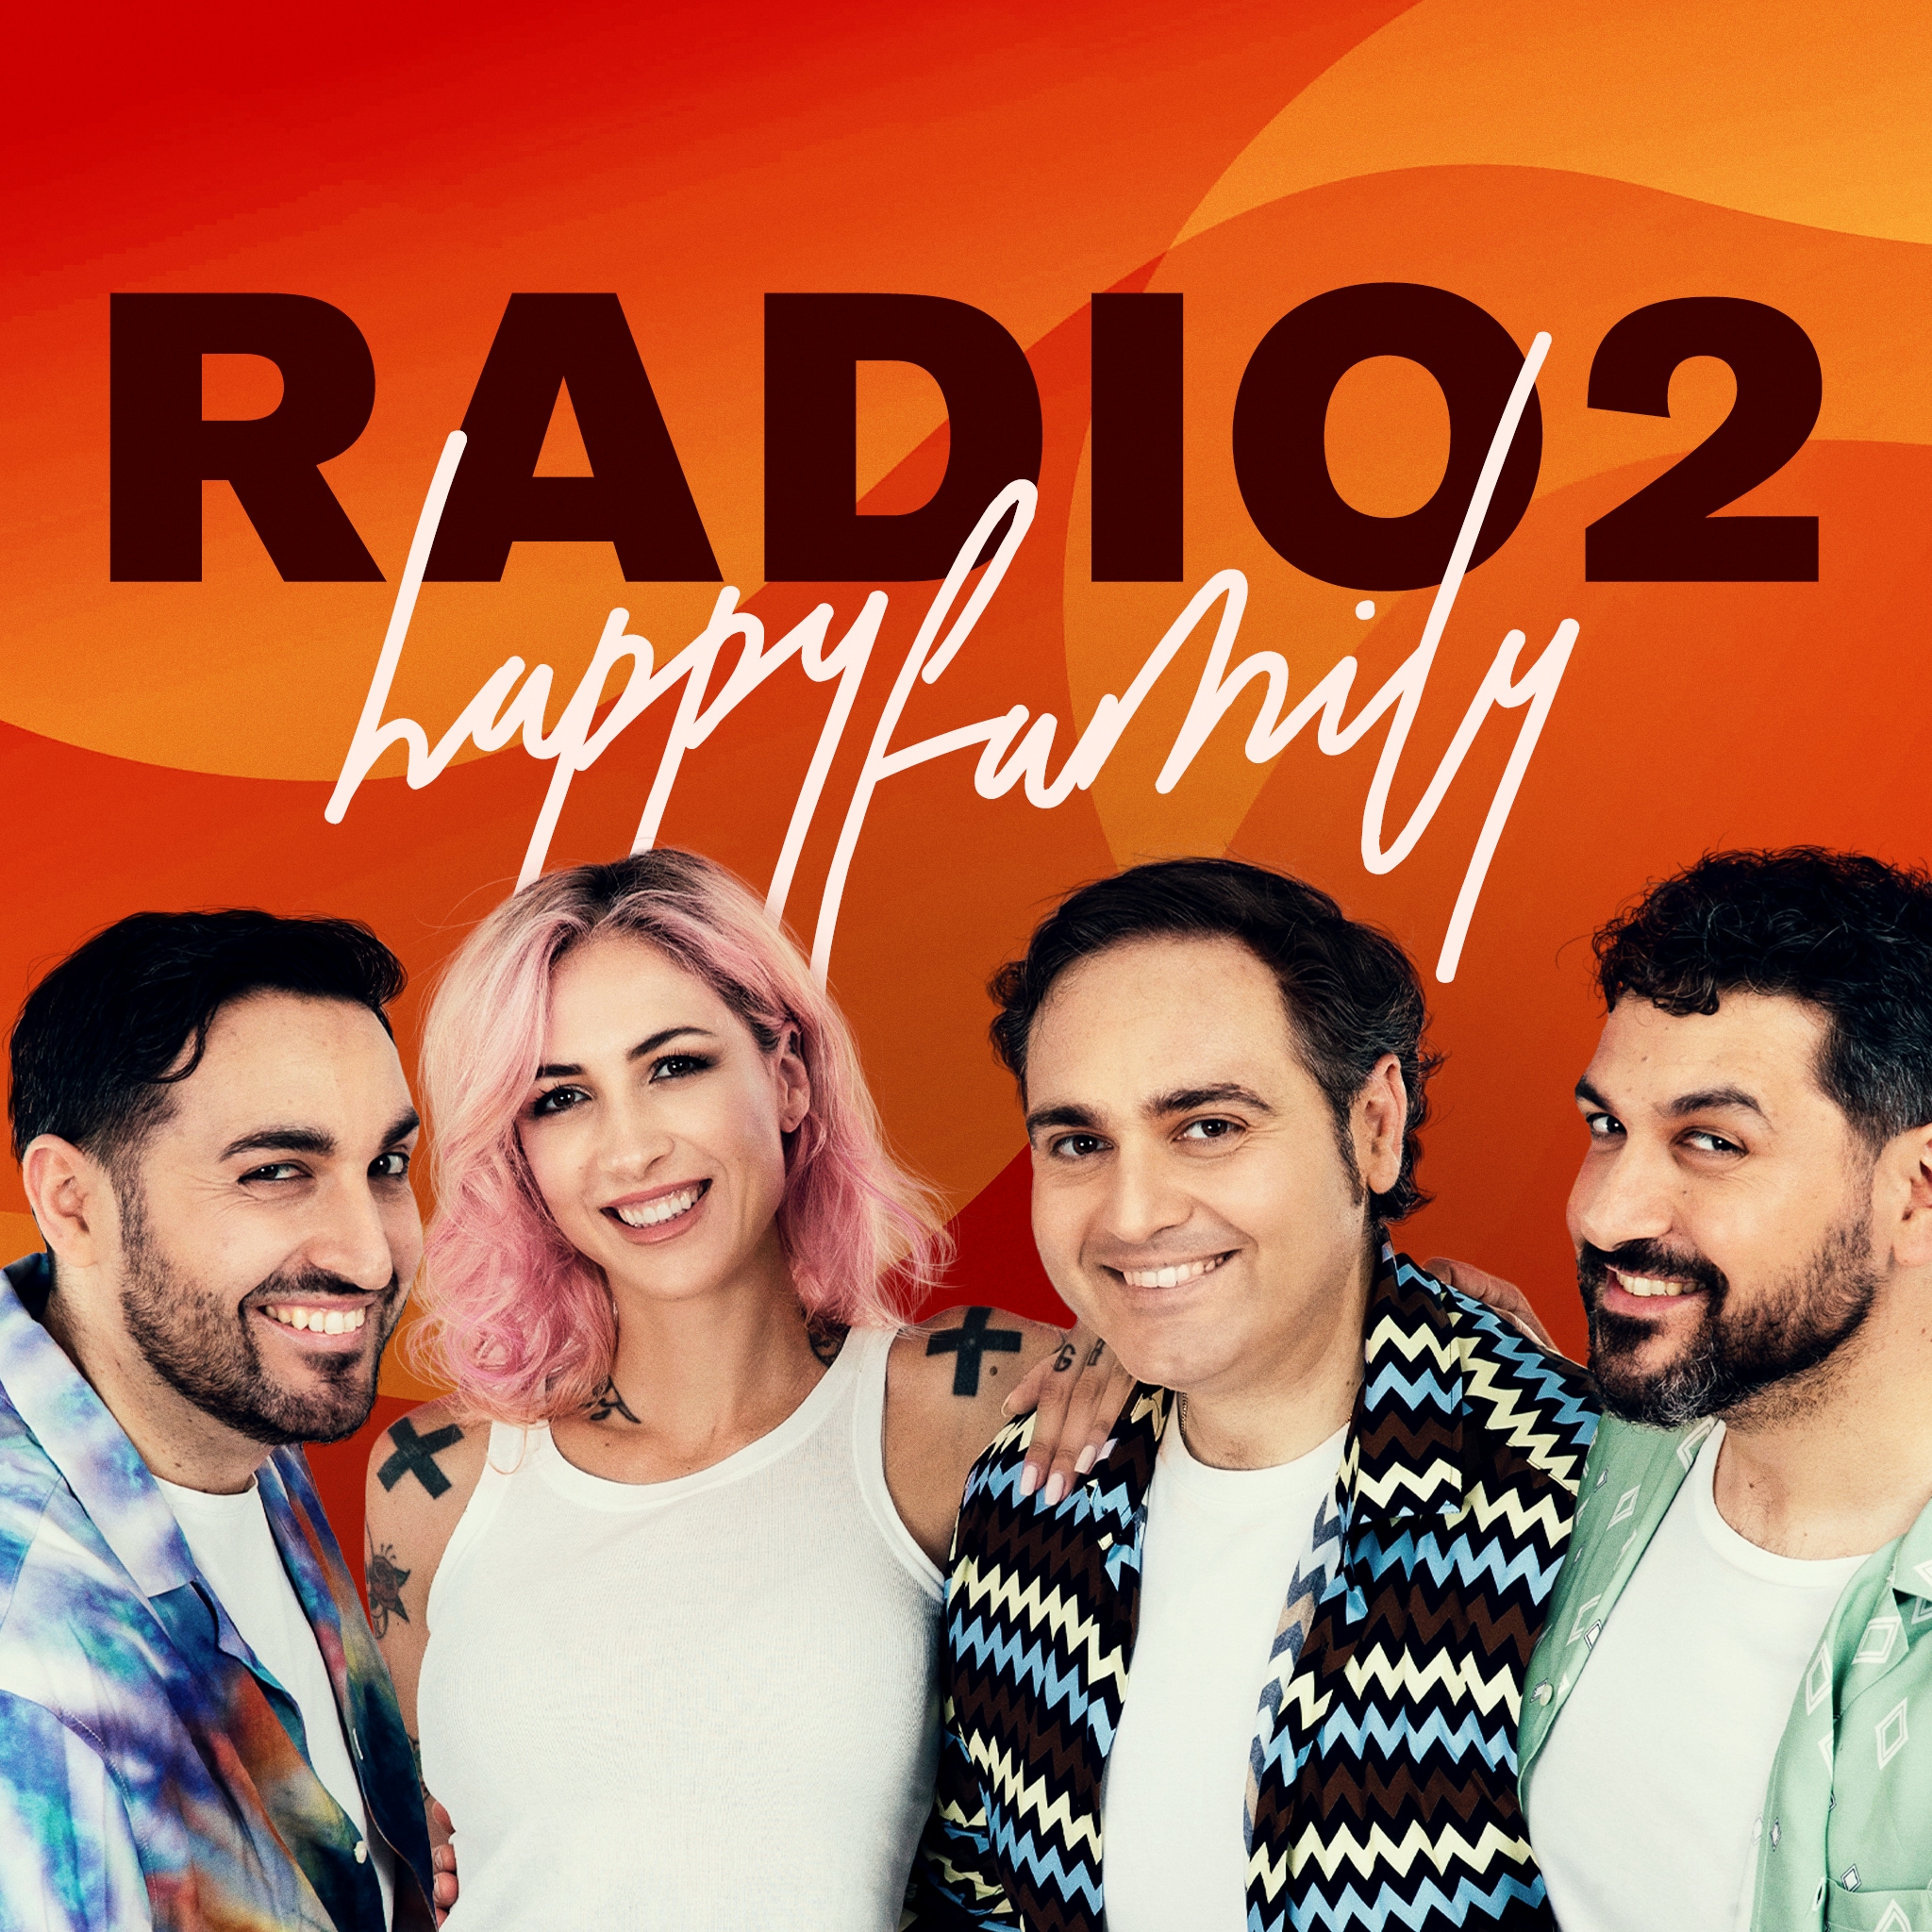 Rai Radio 2 Radio2 Happy Family